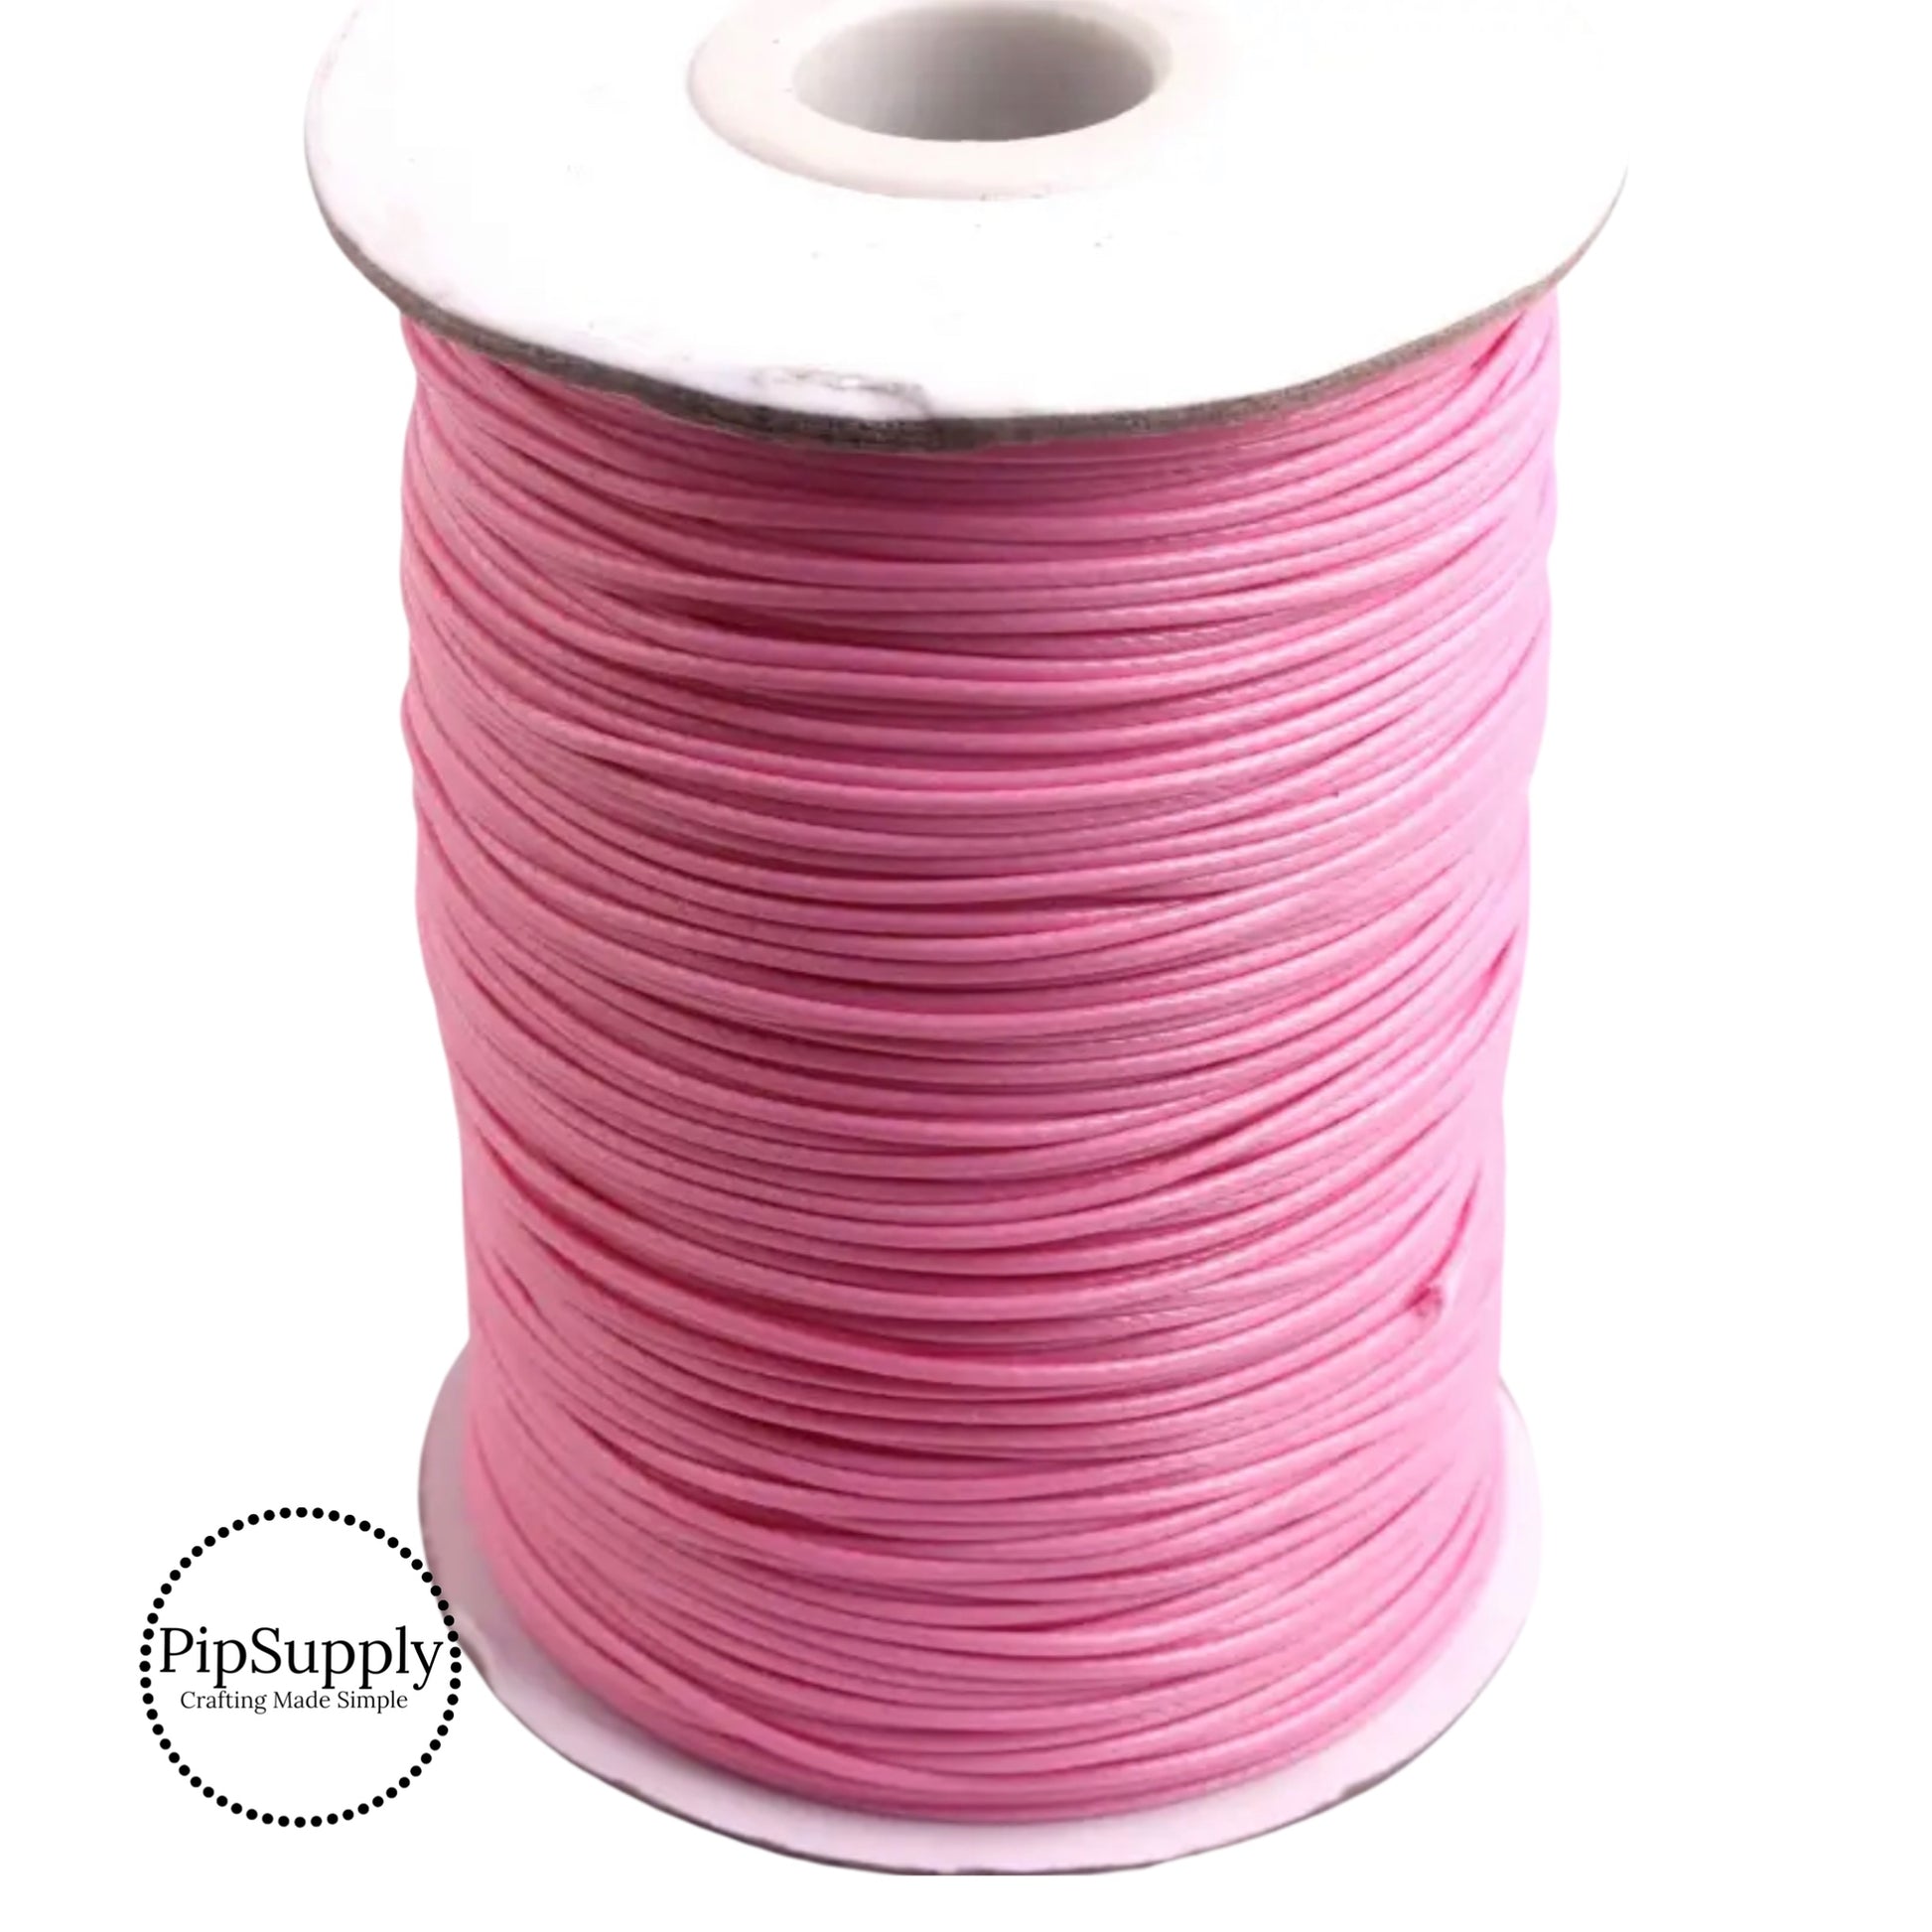 Nylon Cord By The Yard - Pink Nylon Cord By The Yard - DIY Jewelry